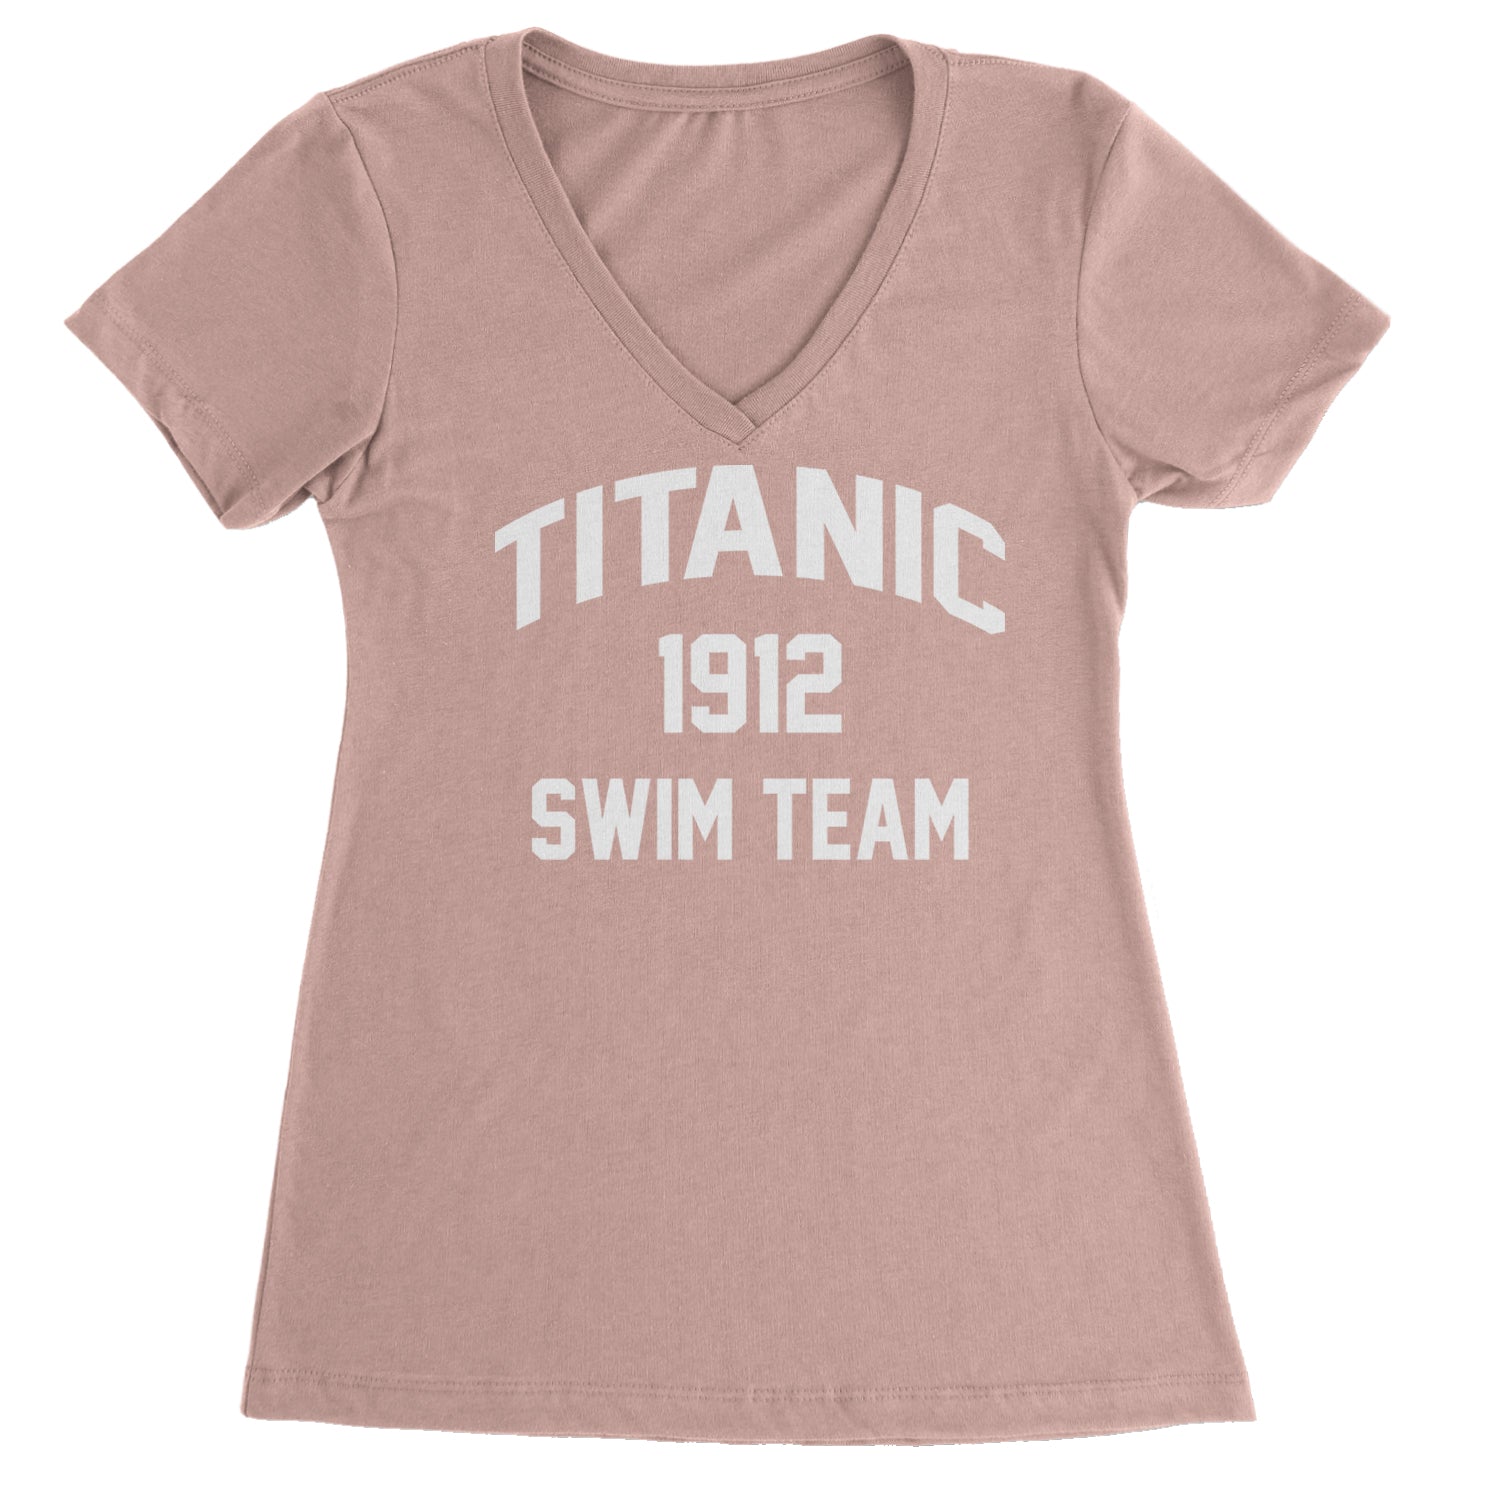 Titanic Swim Team 1912 Funny Cruise Ladies V-Neck T-shirt Light Pink